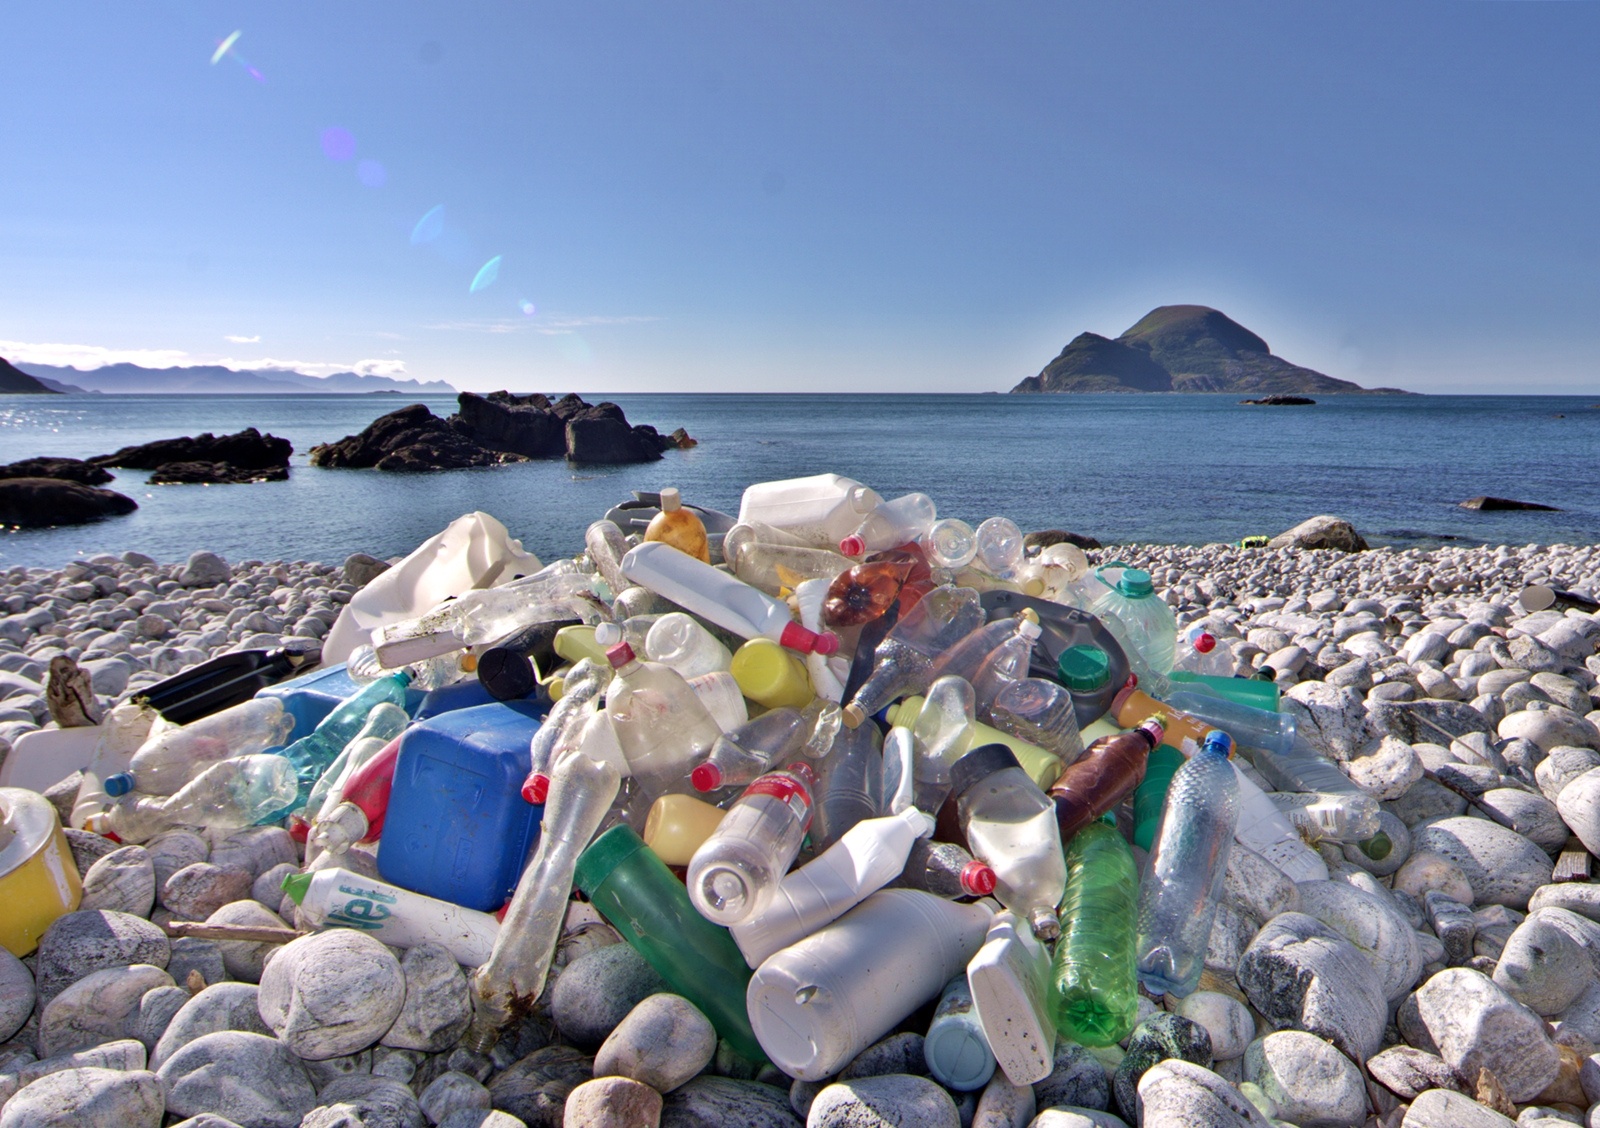 Fishing for Litter - Plastic Smart Cities